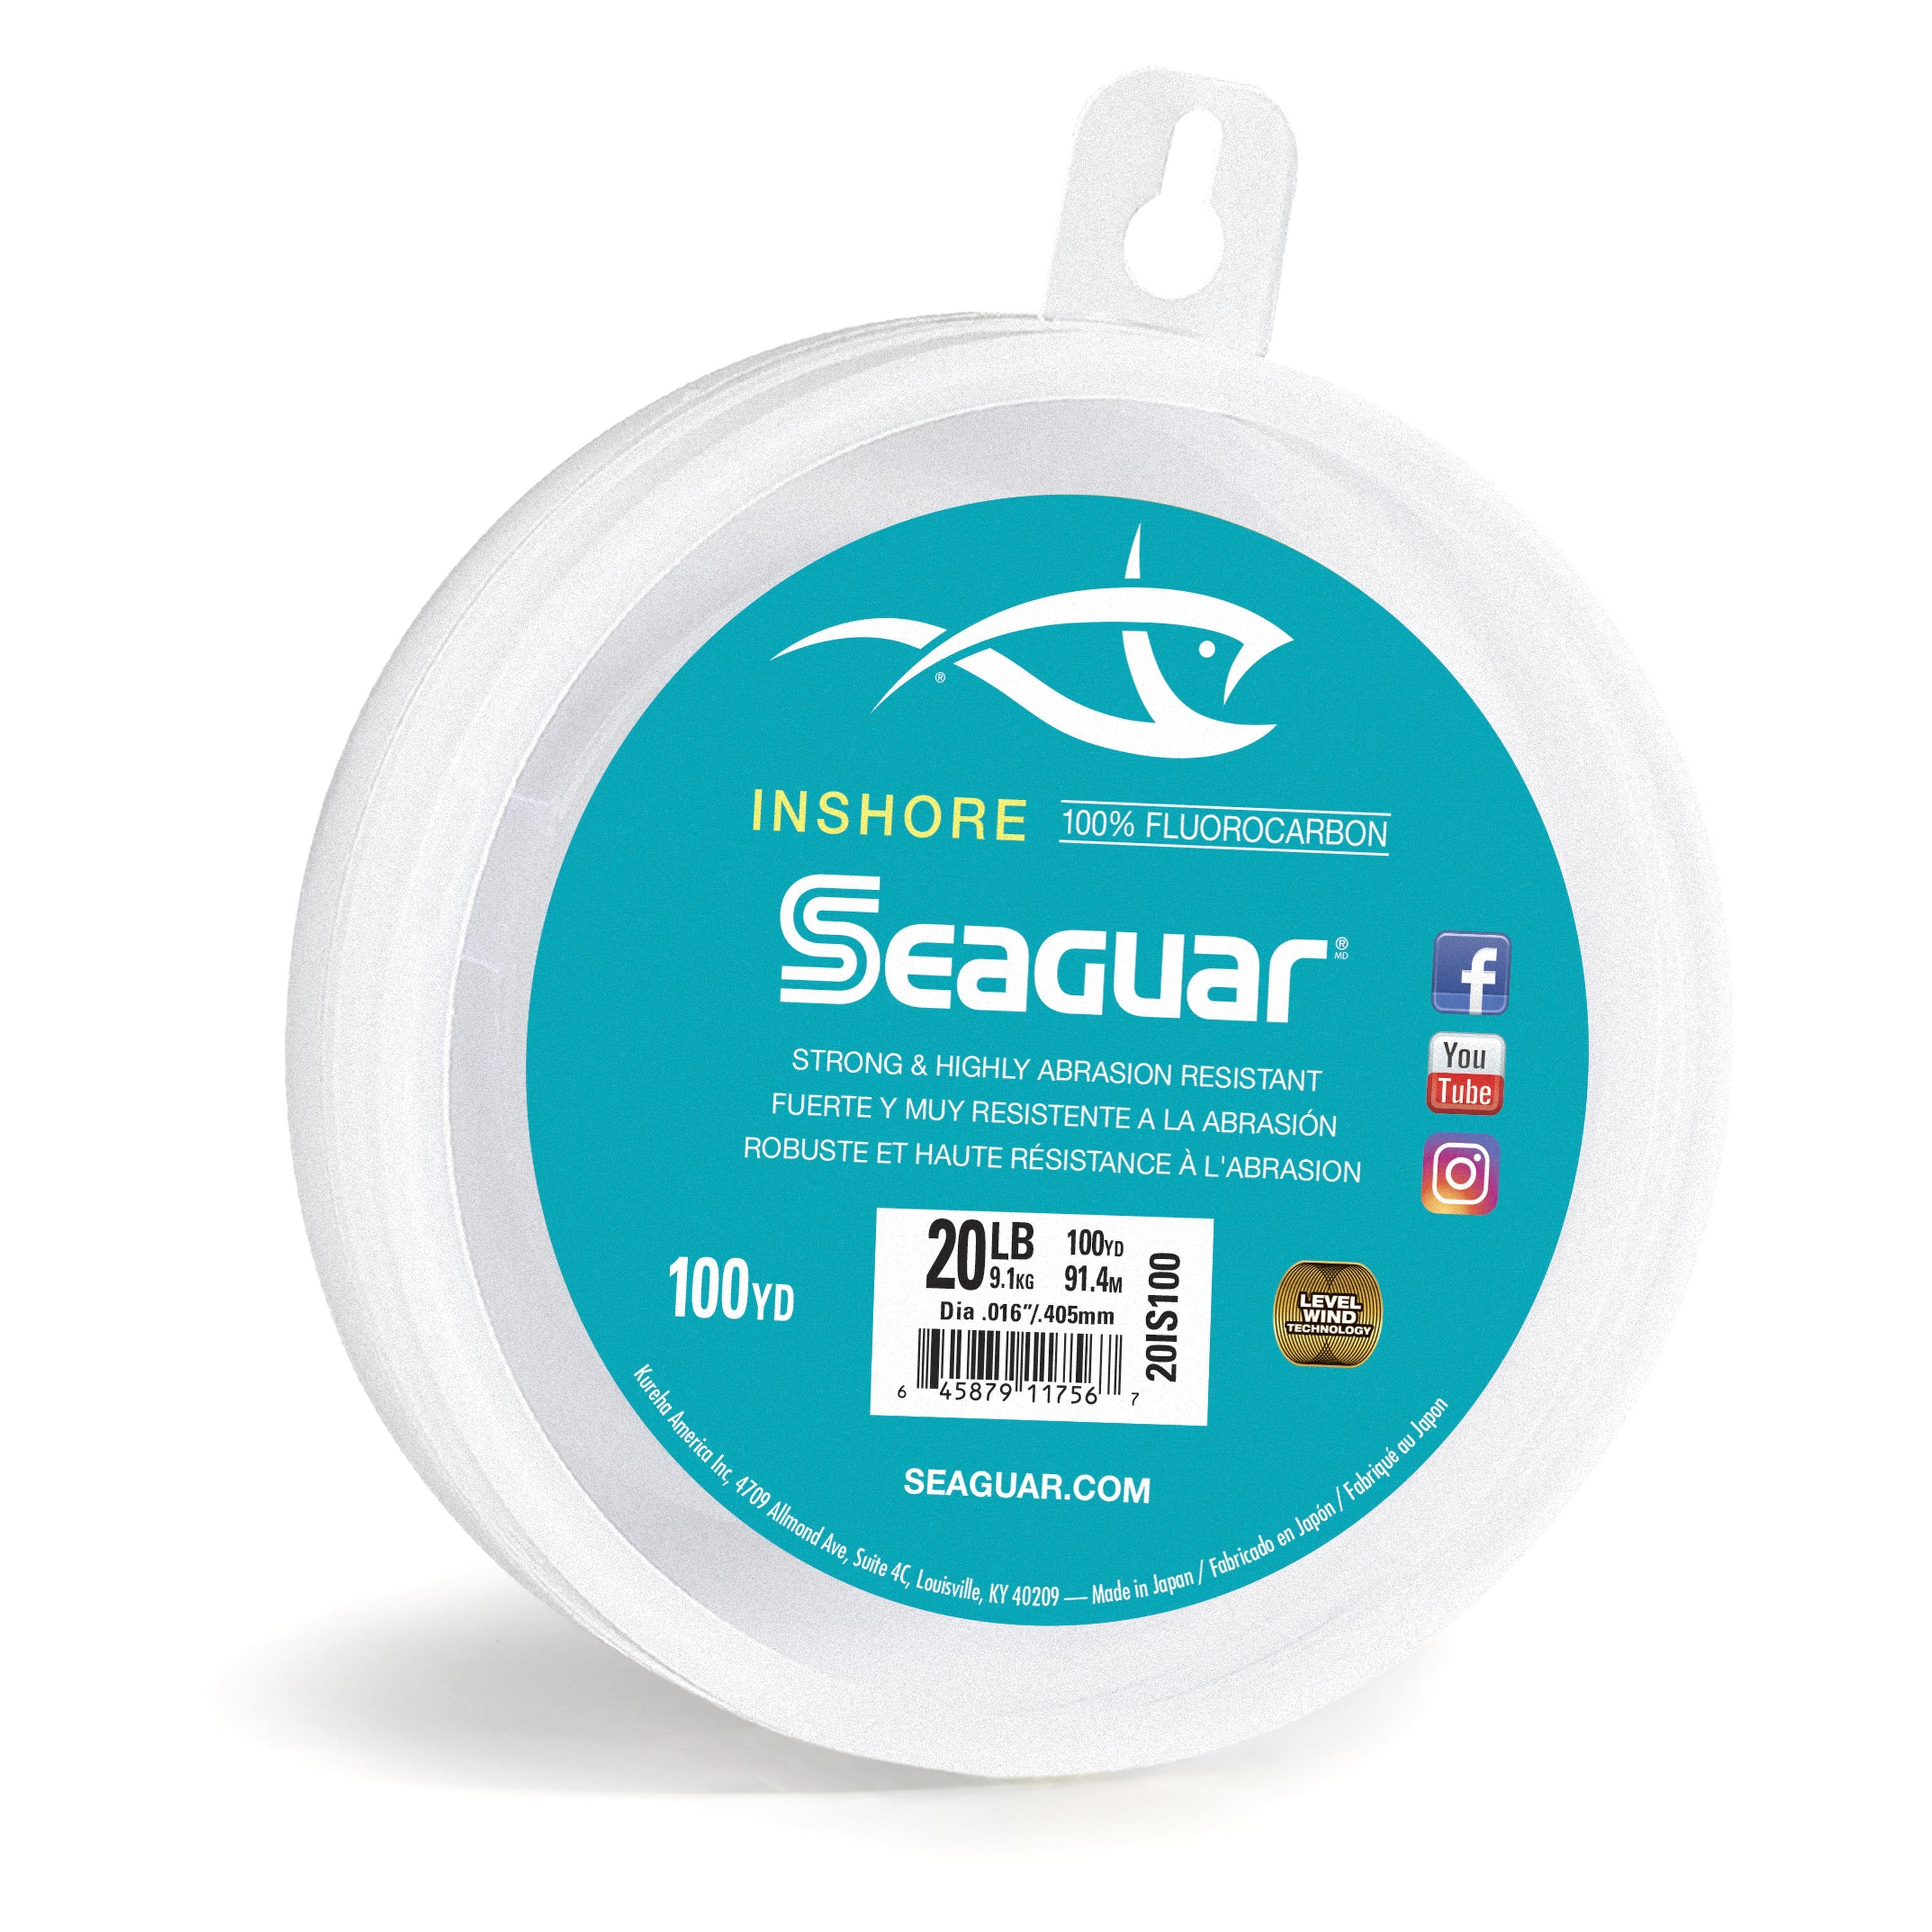 Seaguar Inshore Fluorocarbon Fishing Line